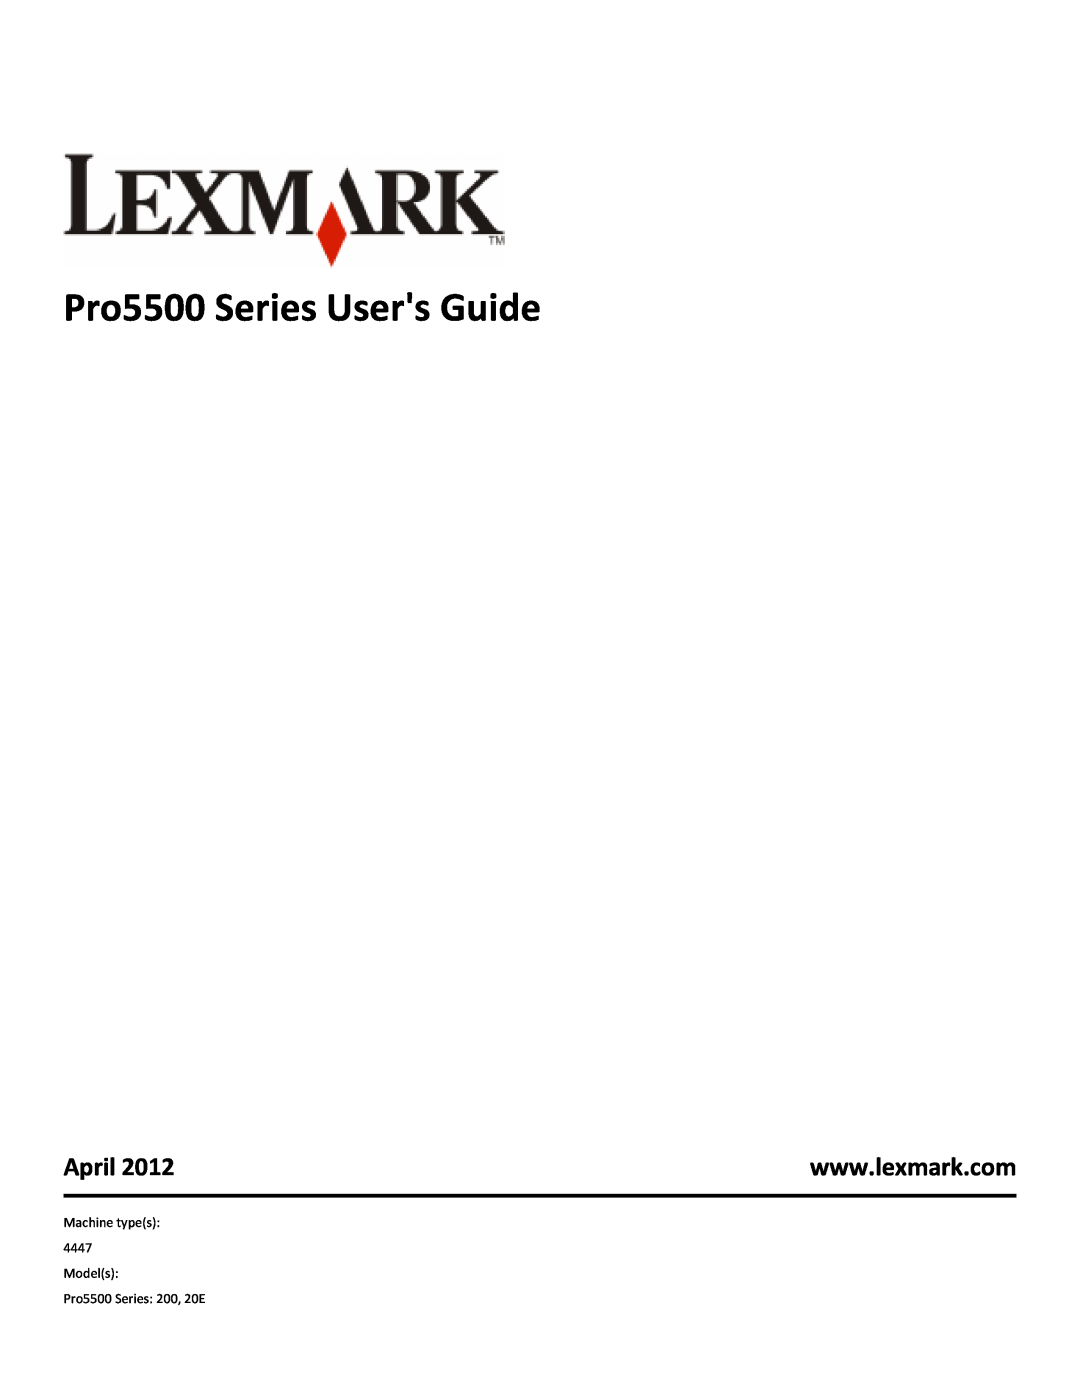 Lexmark 200, 20E manual Pro5500 Series Users Guide, April 